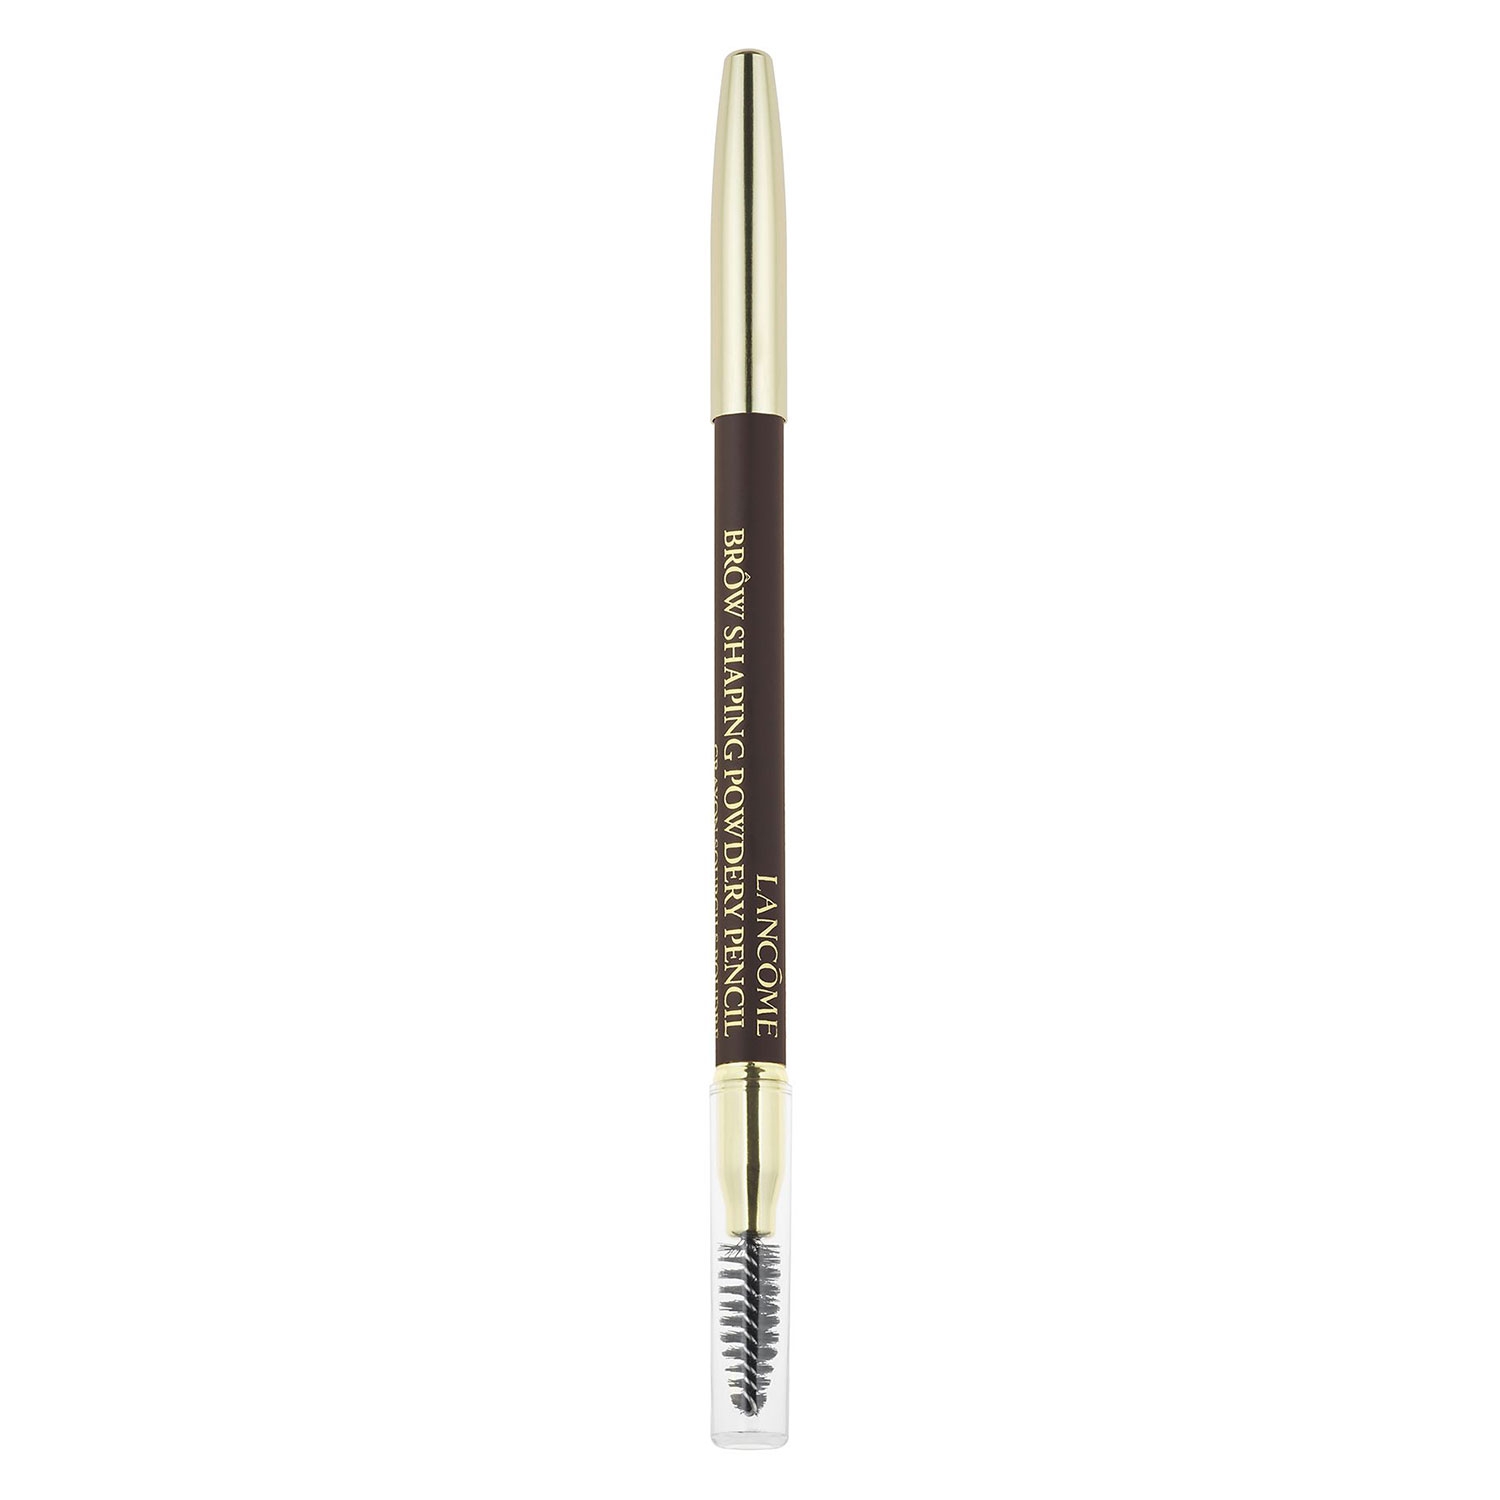 Image du produit de Lancôme Brows - Brow Shaping Powdery Pencil Dark Brown 08